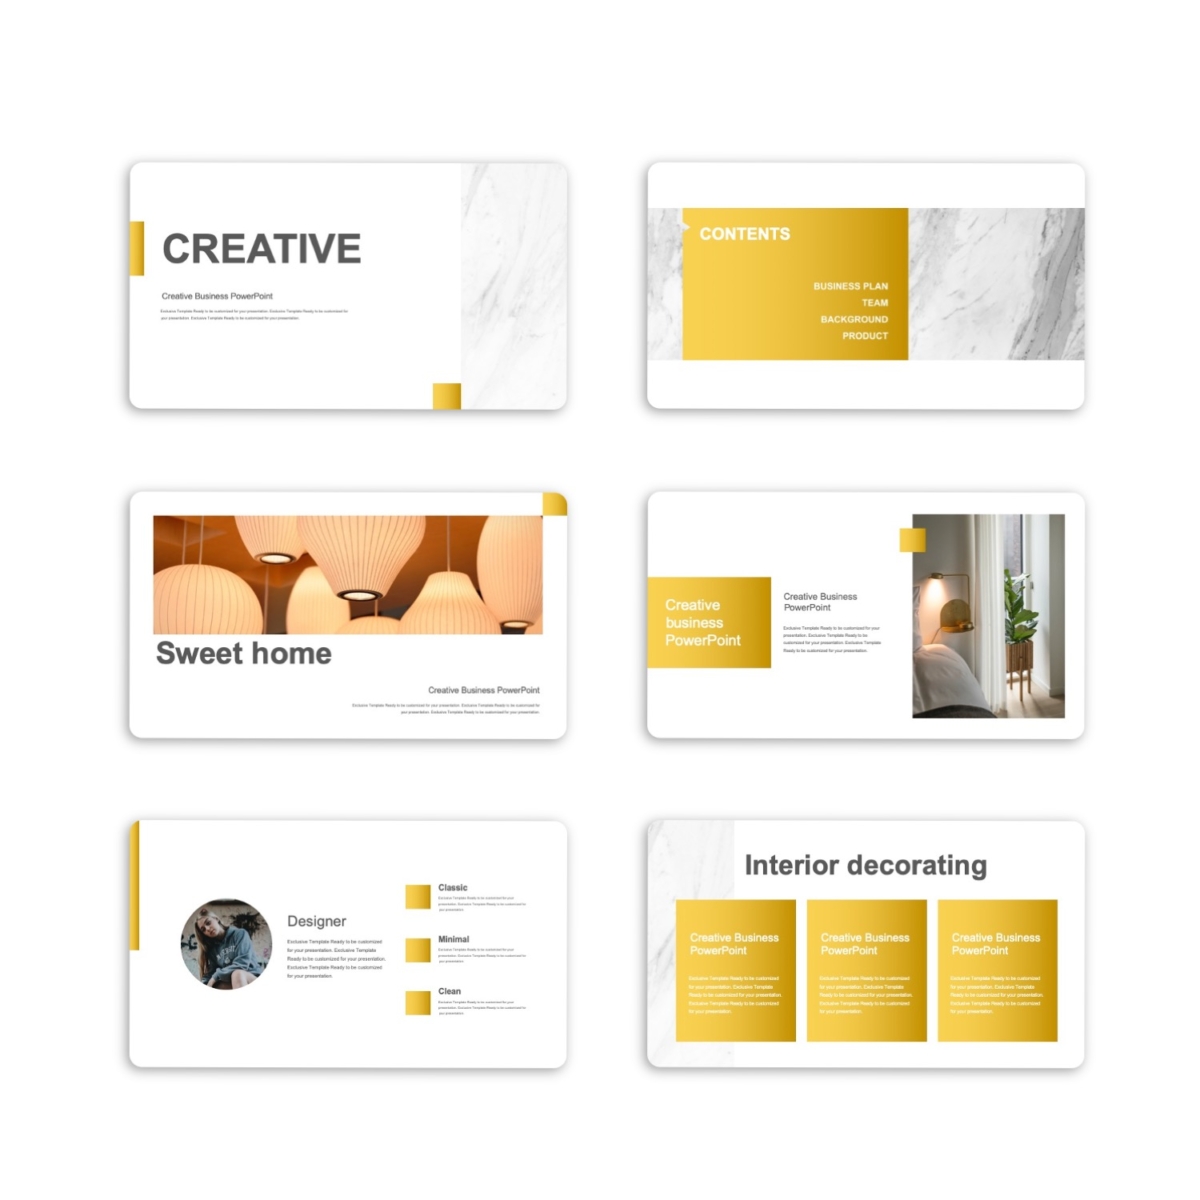 Golden Creative Interior Design PowerPoint Template